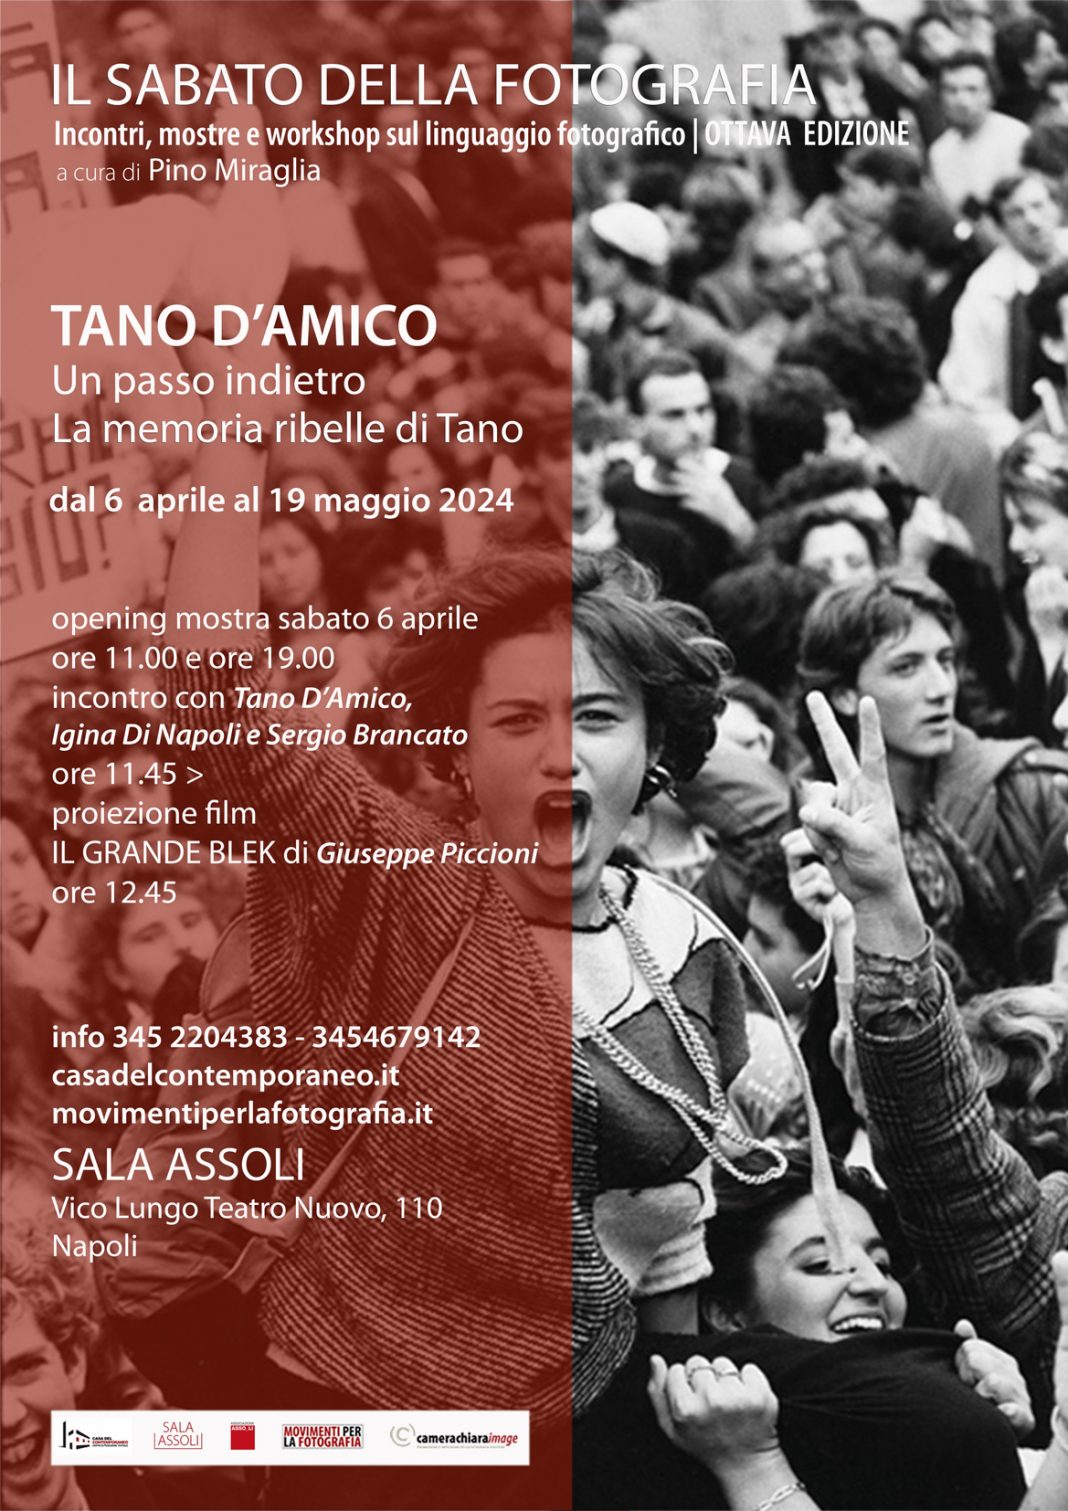 Tano D’Amico – La memoria ribelle di Tanohttps://www.exibart.com/repository/media/formidable/11/img/98b/Locandina-Sabato-VIII-Tano-DAmico-1068x1511.jpg